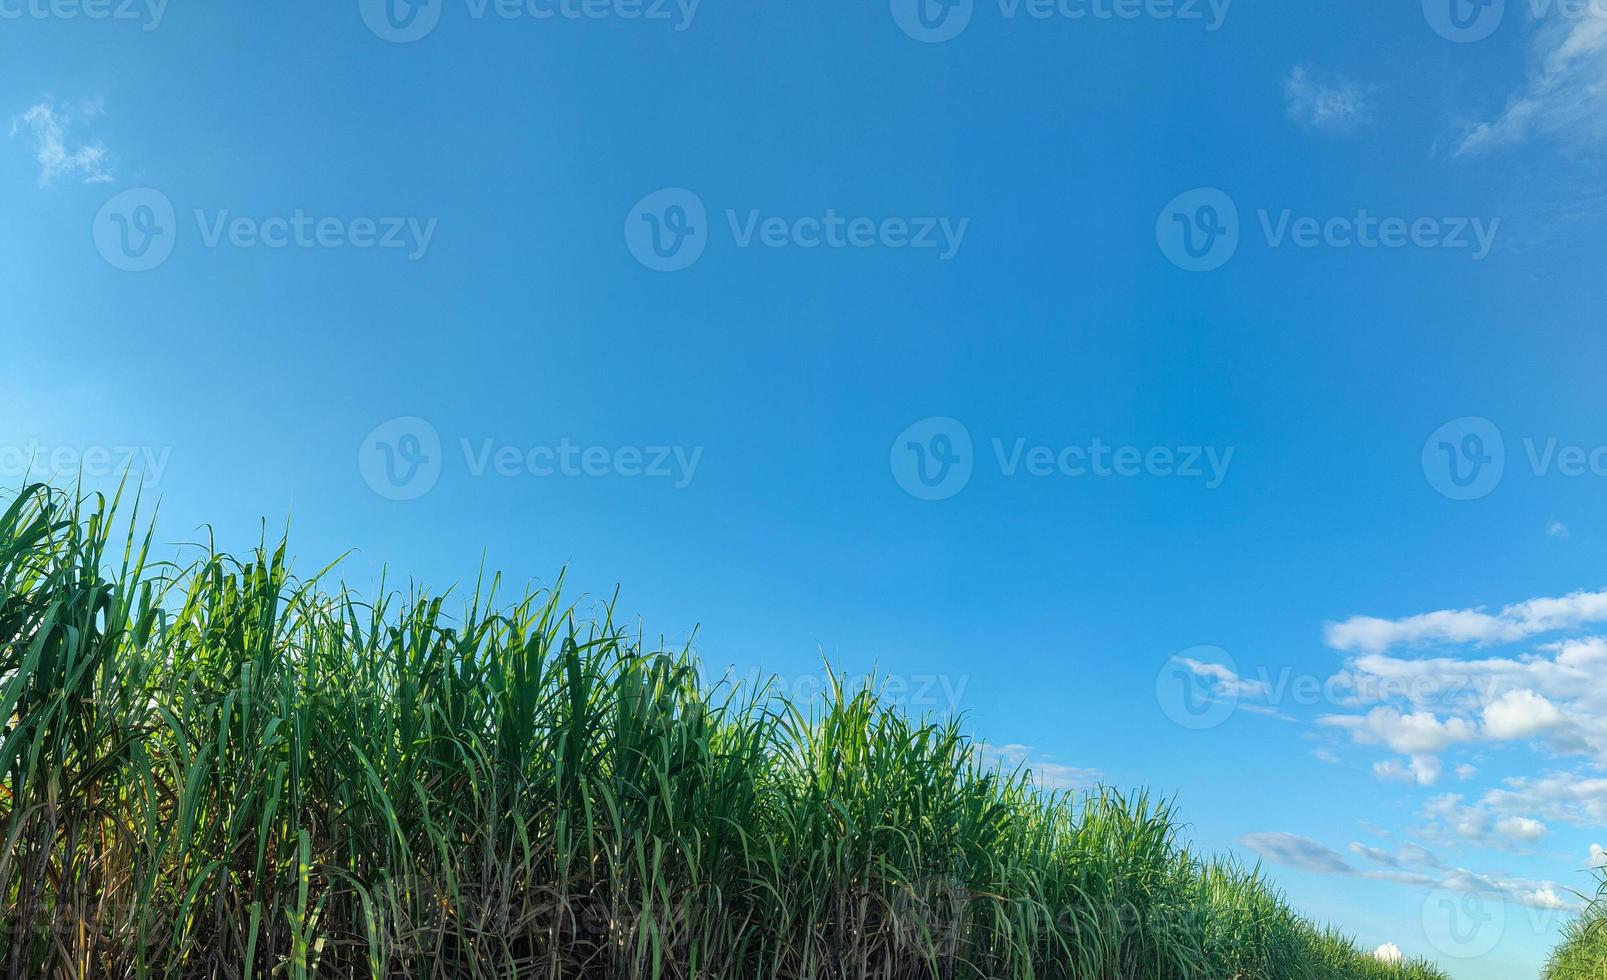 Sugarcane fields and blue sky photo